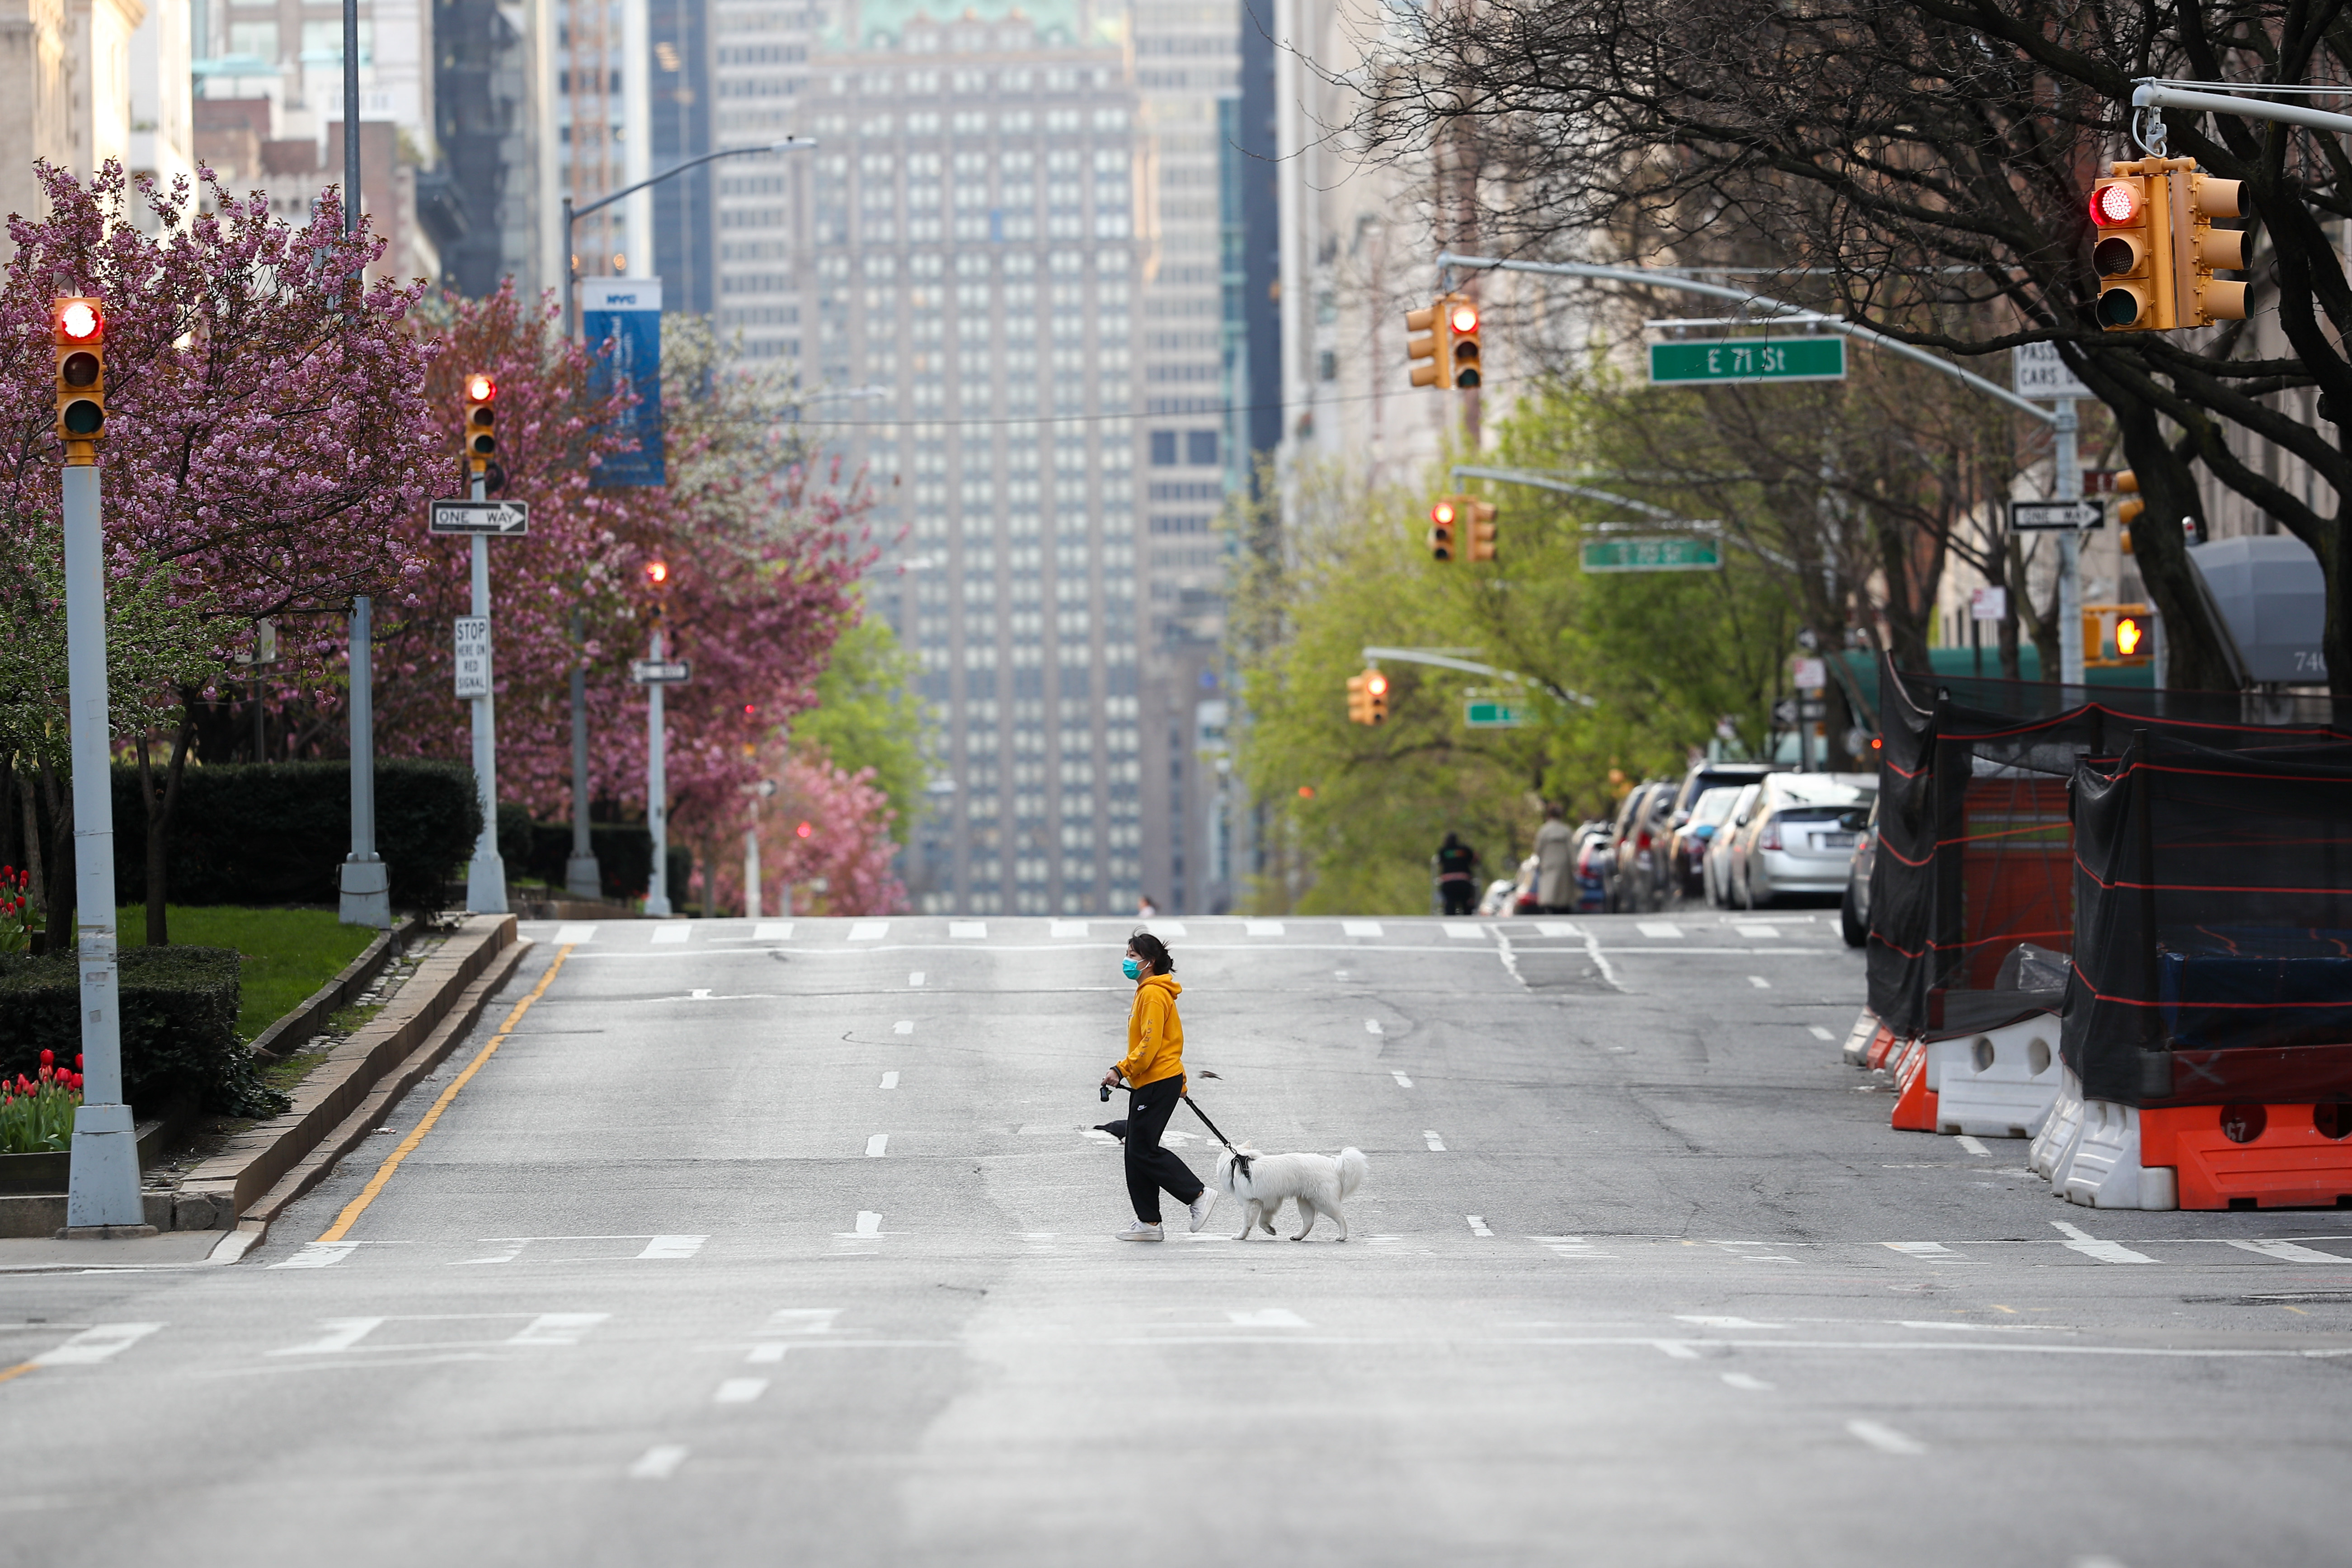 Streets in New York City remain nearly deserted due to coronavirus